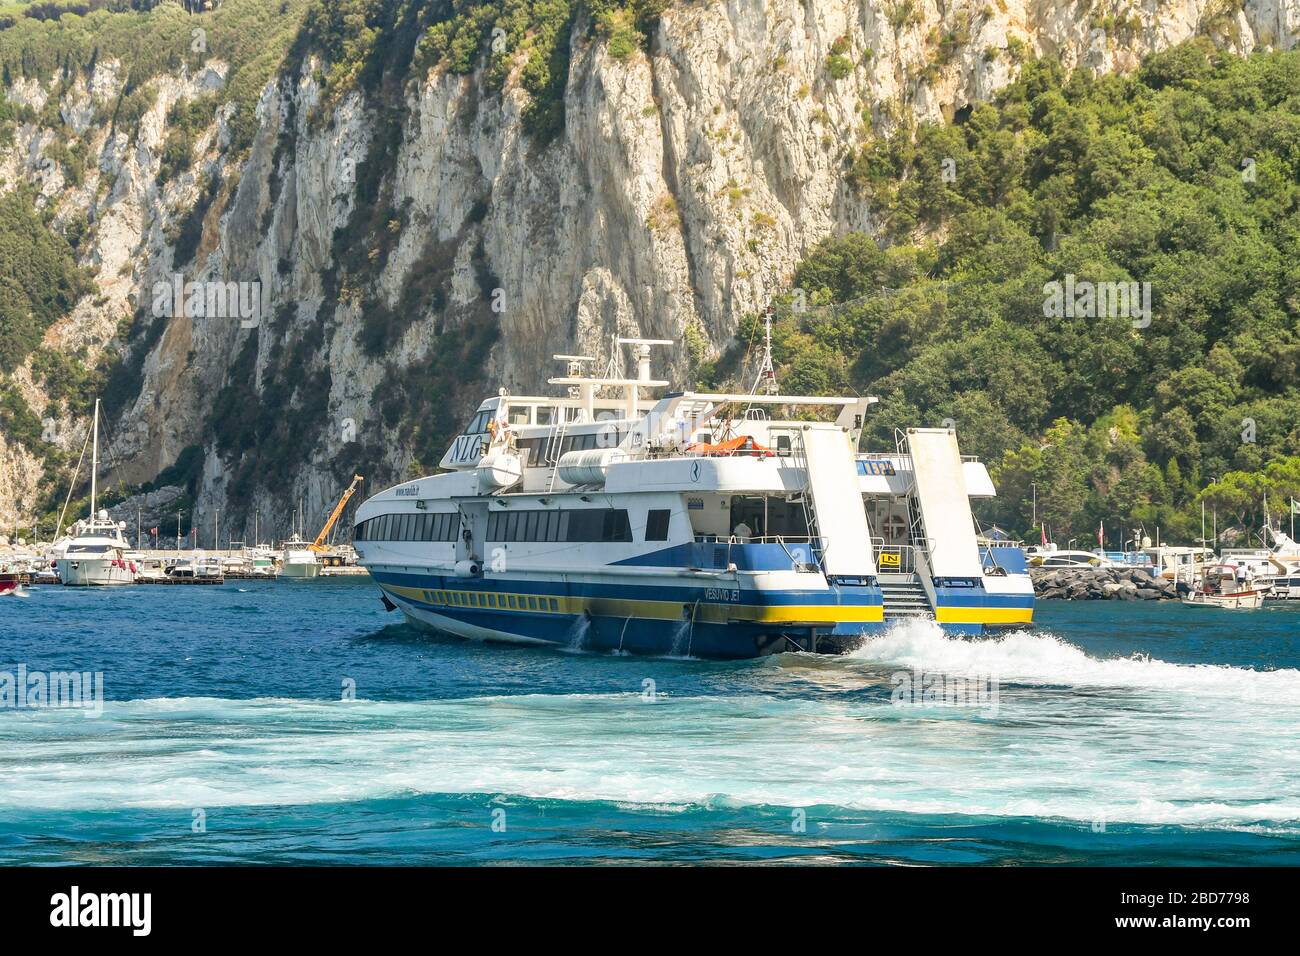 ISLE OF CAPRI, ITALY - AUGUST 2019: Fast passenger ferry departing the port on the Isle of Capri. Stock Photo